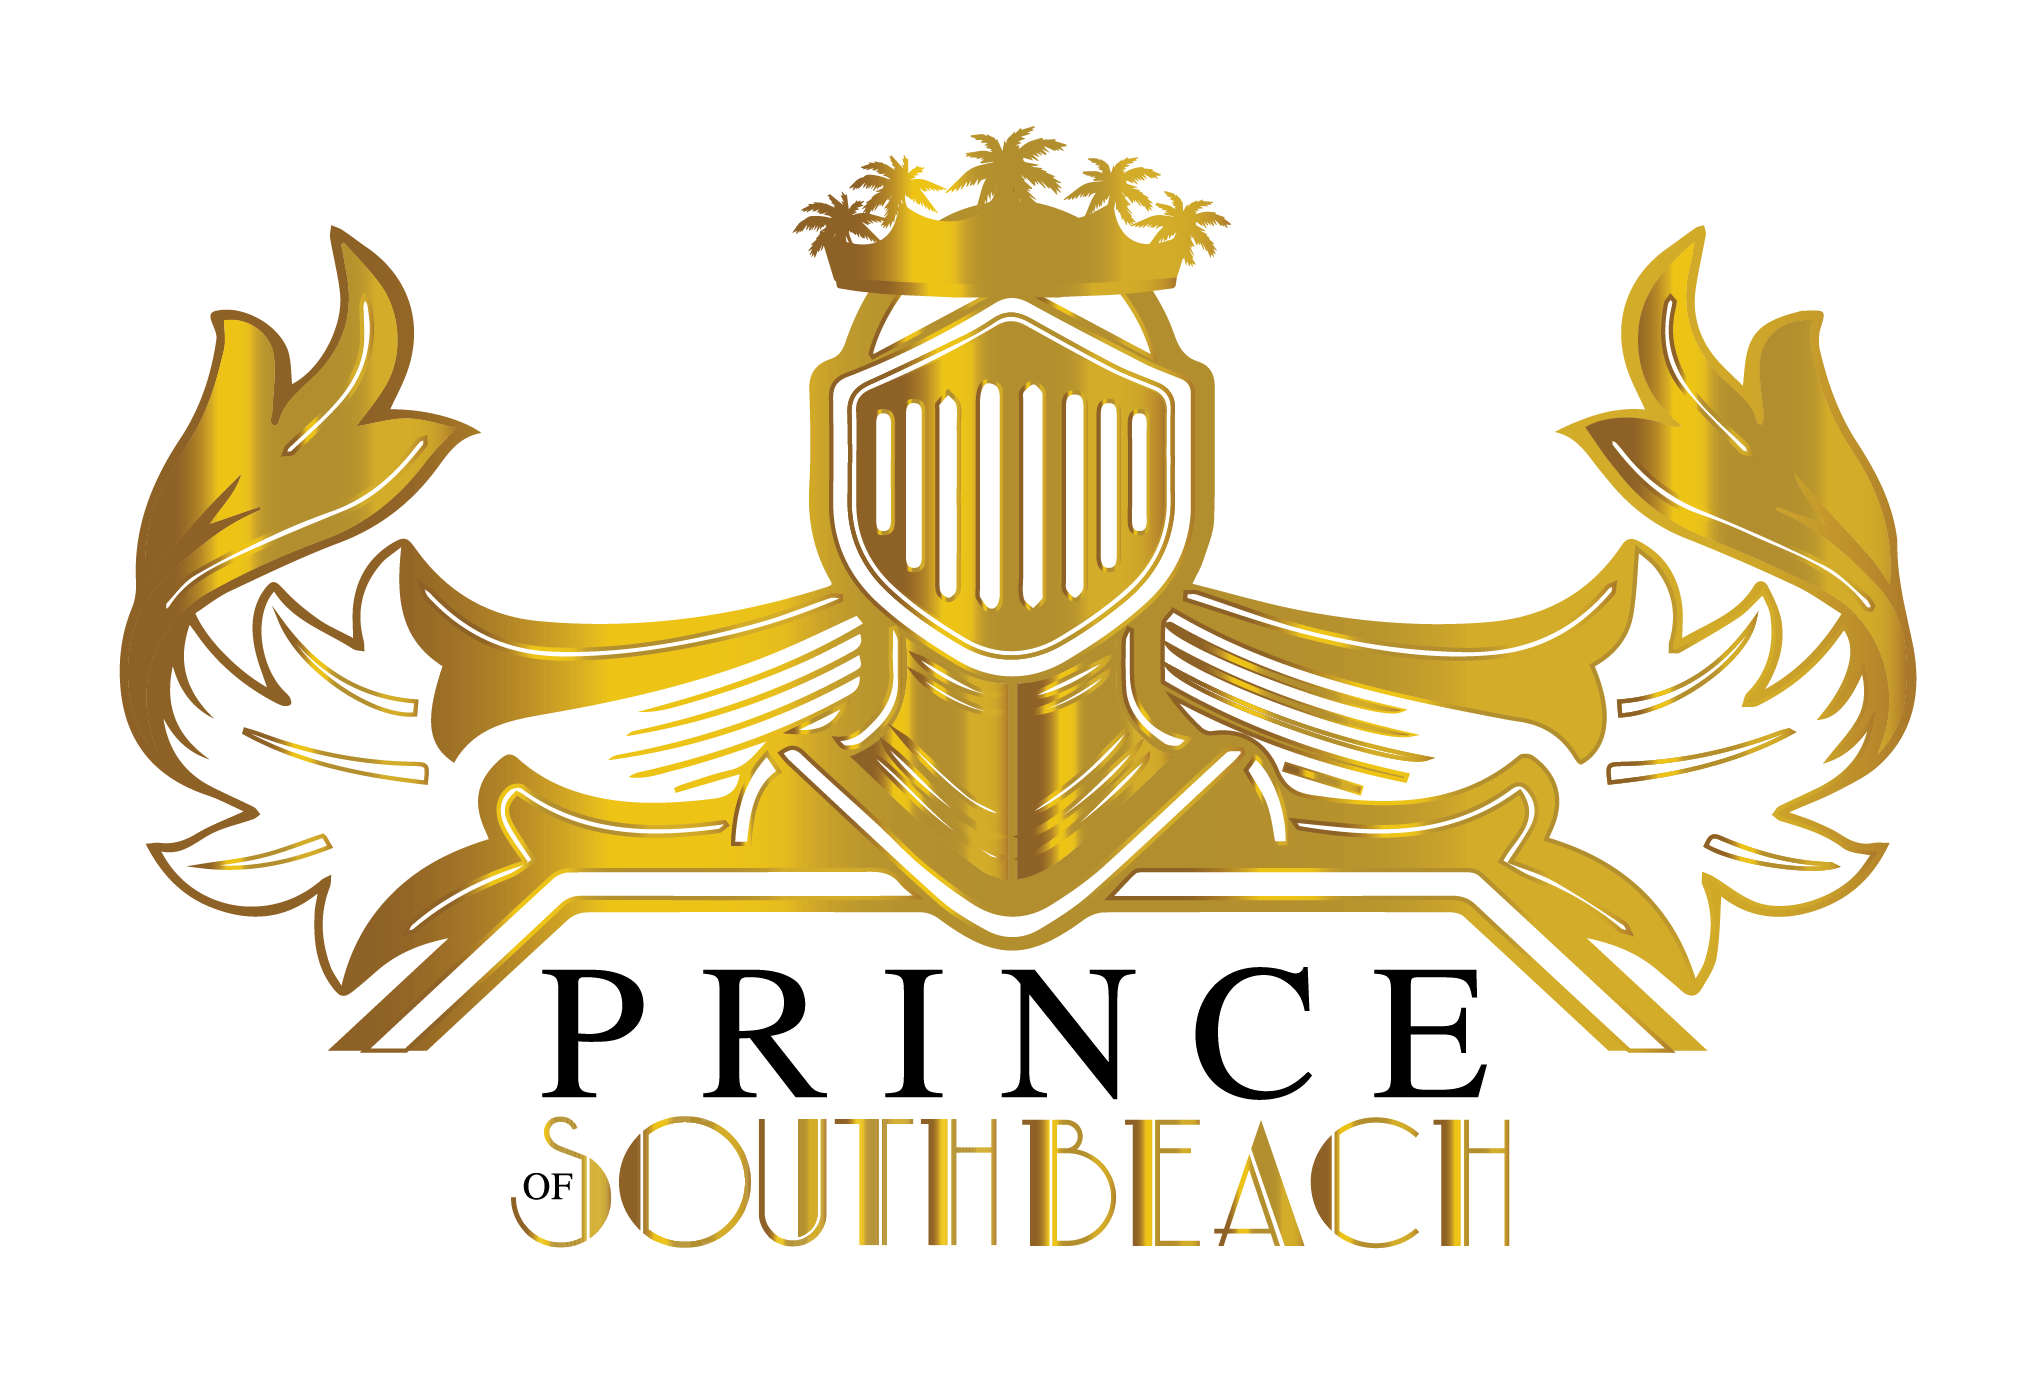 Prince Logo - Prince logo png 8 » PNG Image